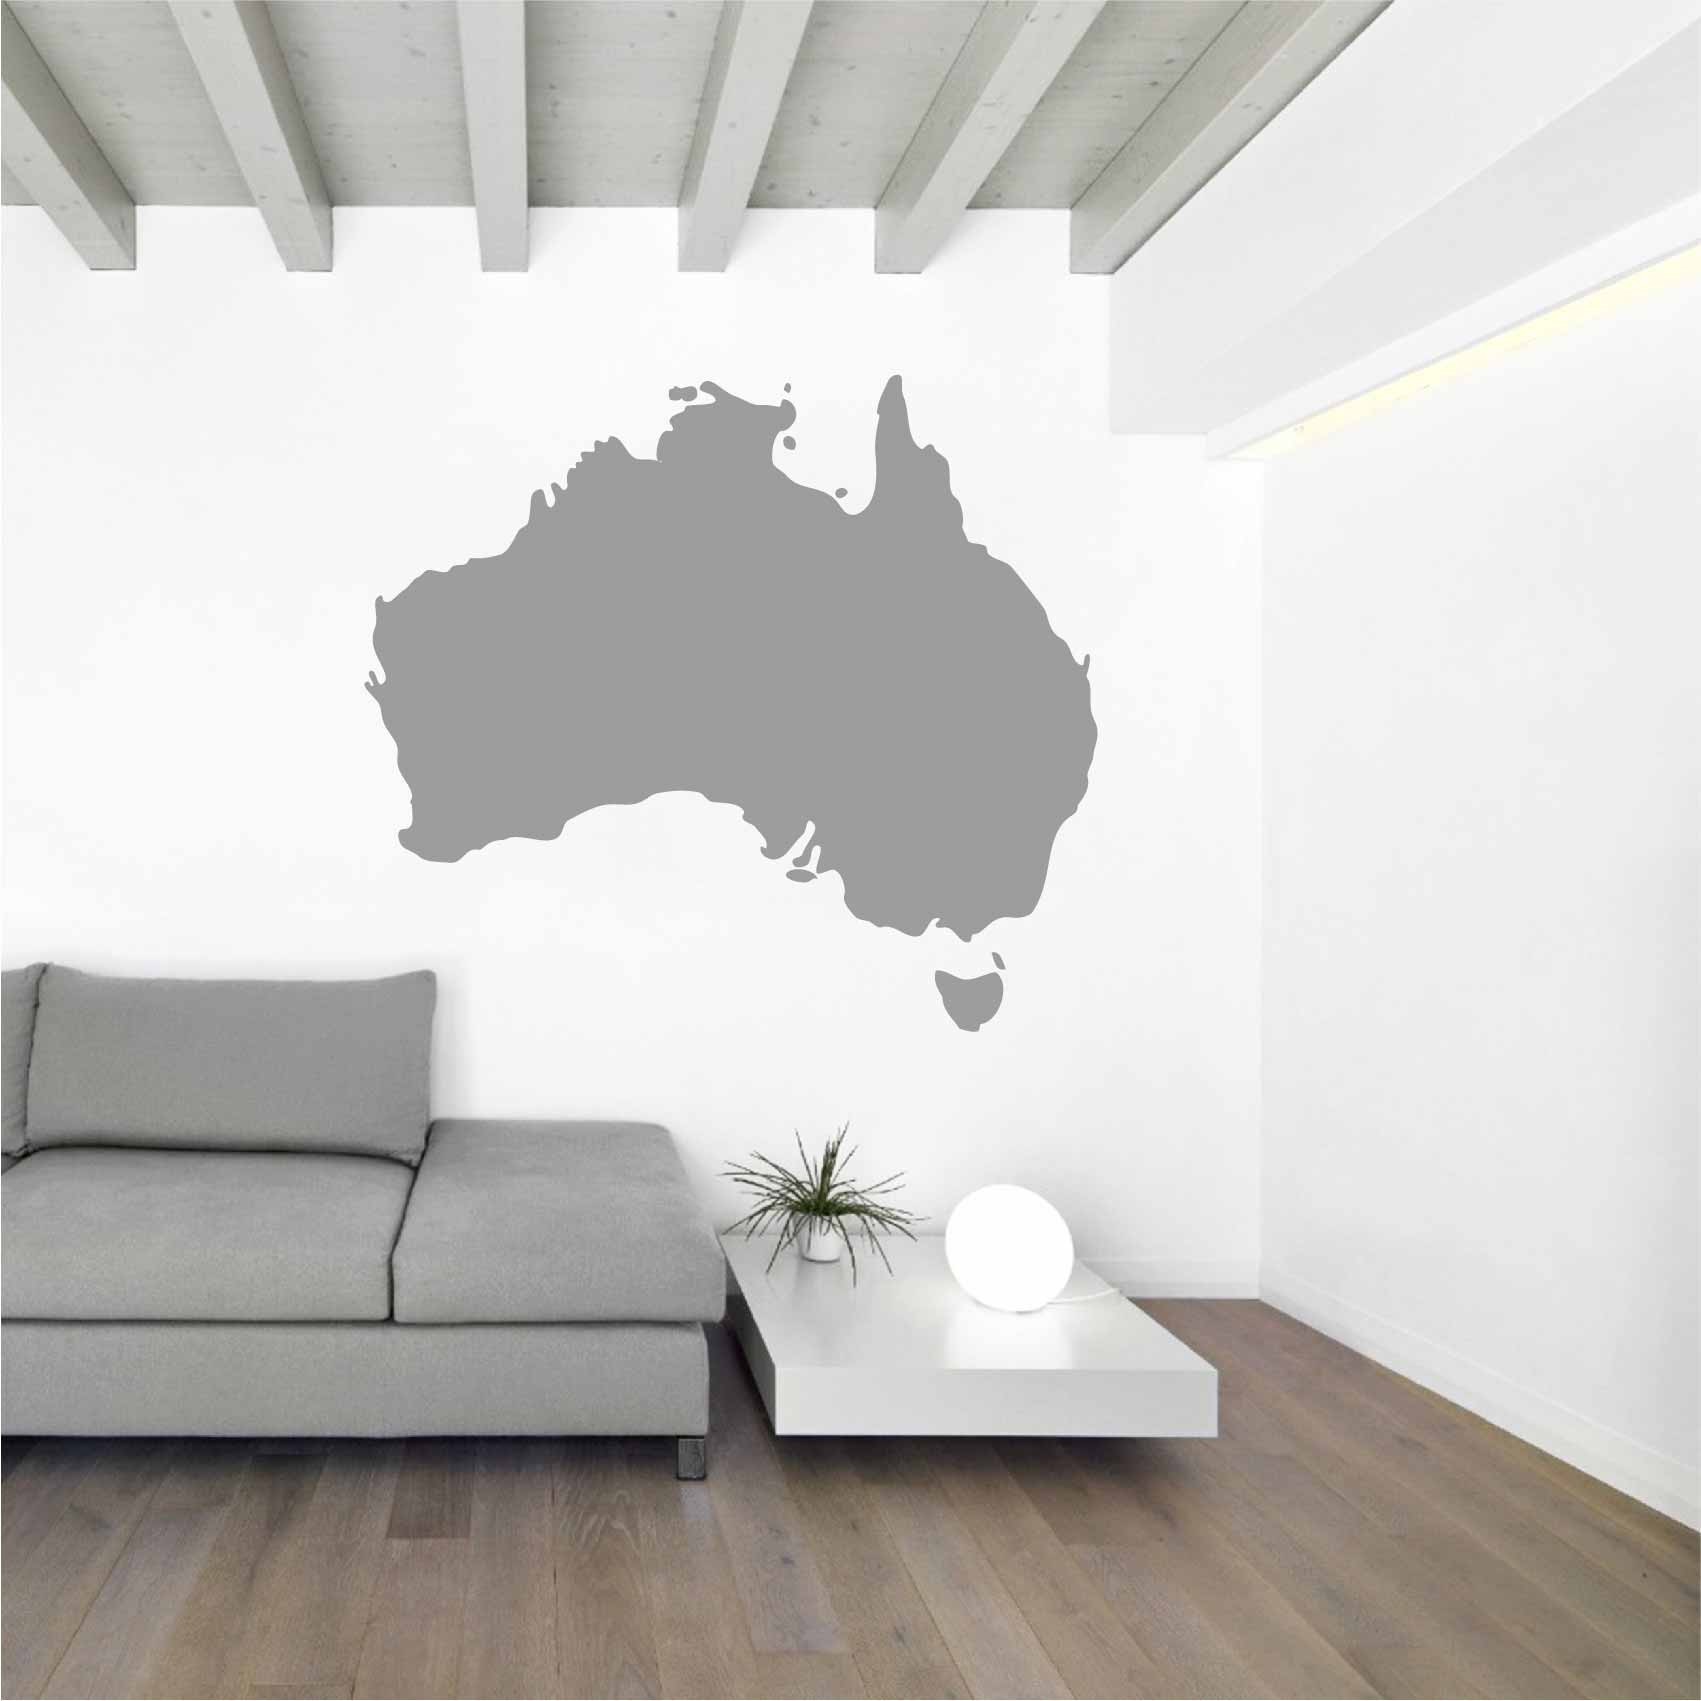 stickers-australie-ref4australie-stickers-muraux-australie-autocollant-deco-mur-salon-chambre-sticker-mural-australia